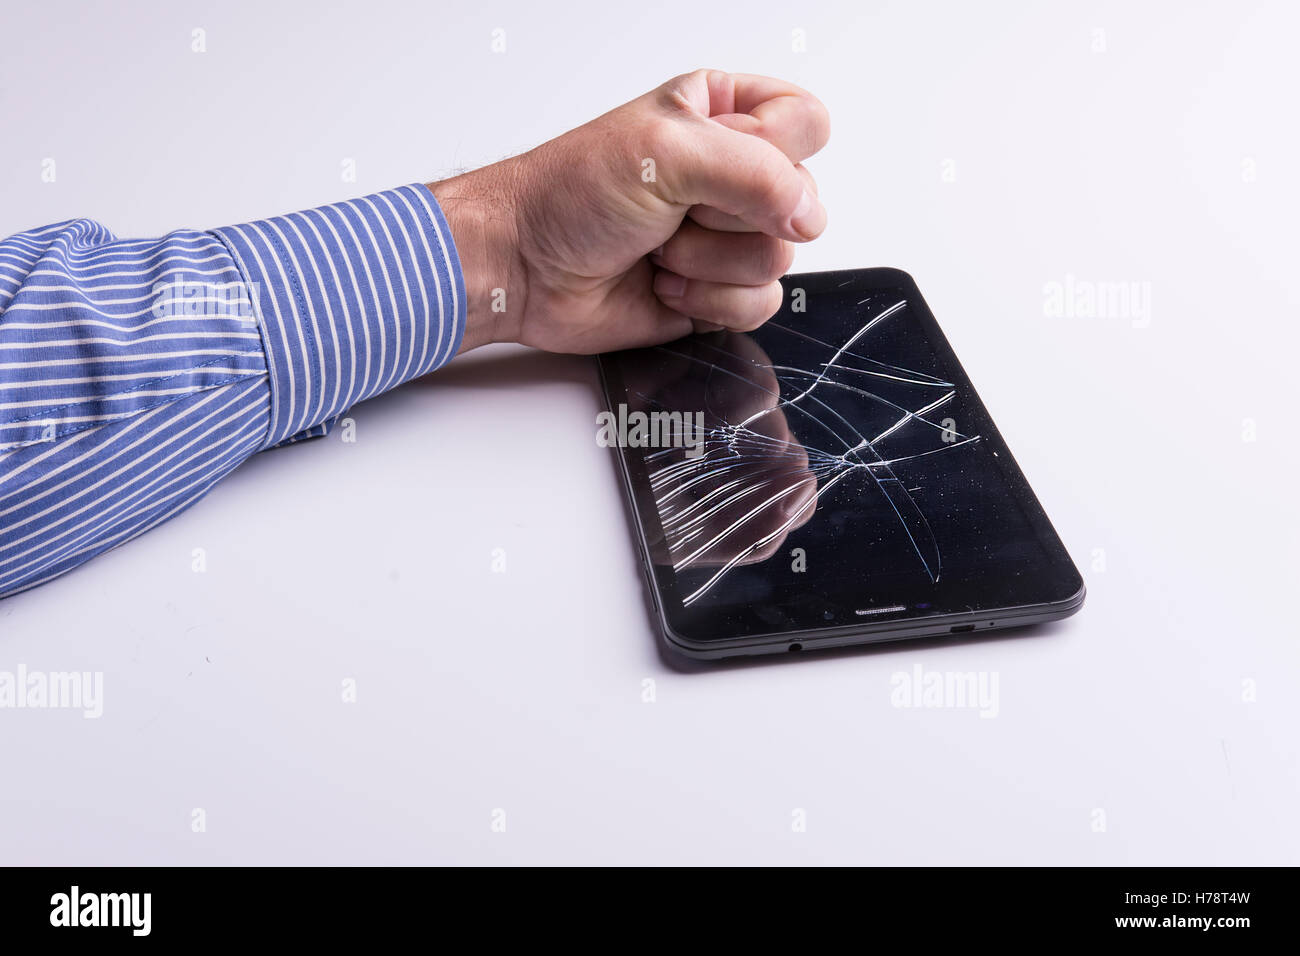 A fist breaks a tablet Stock Photo